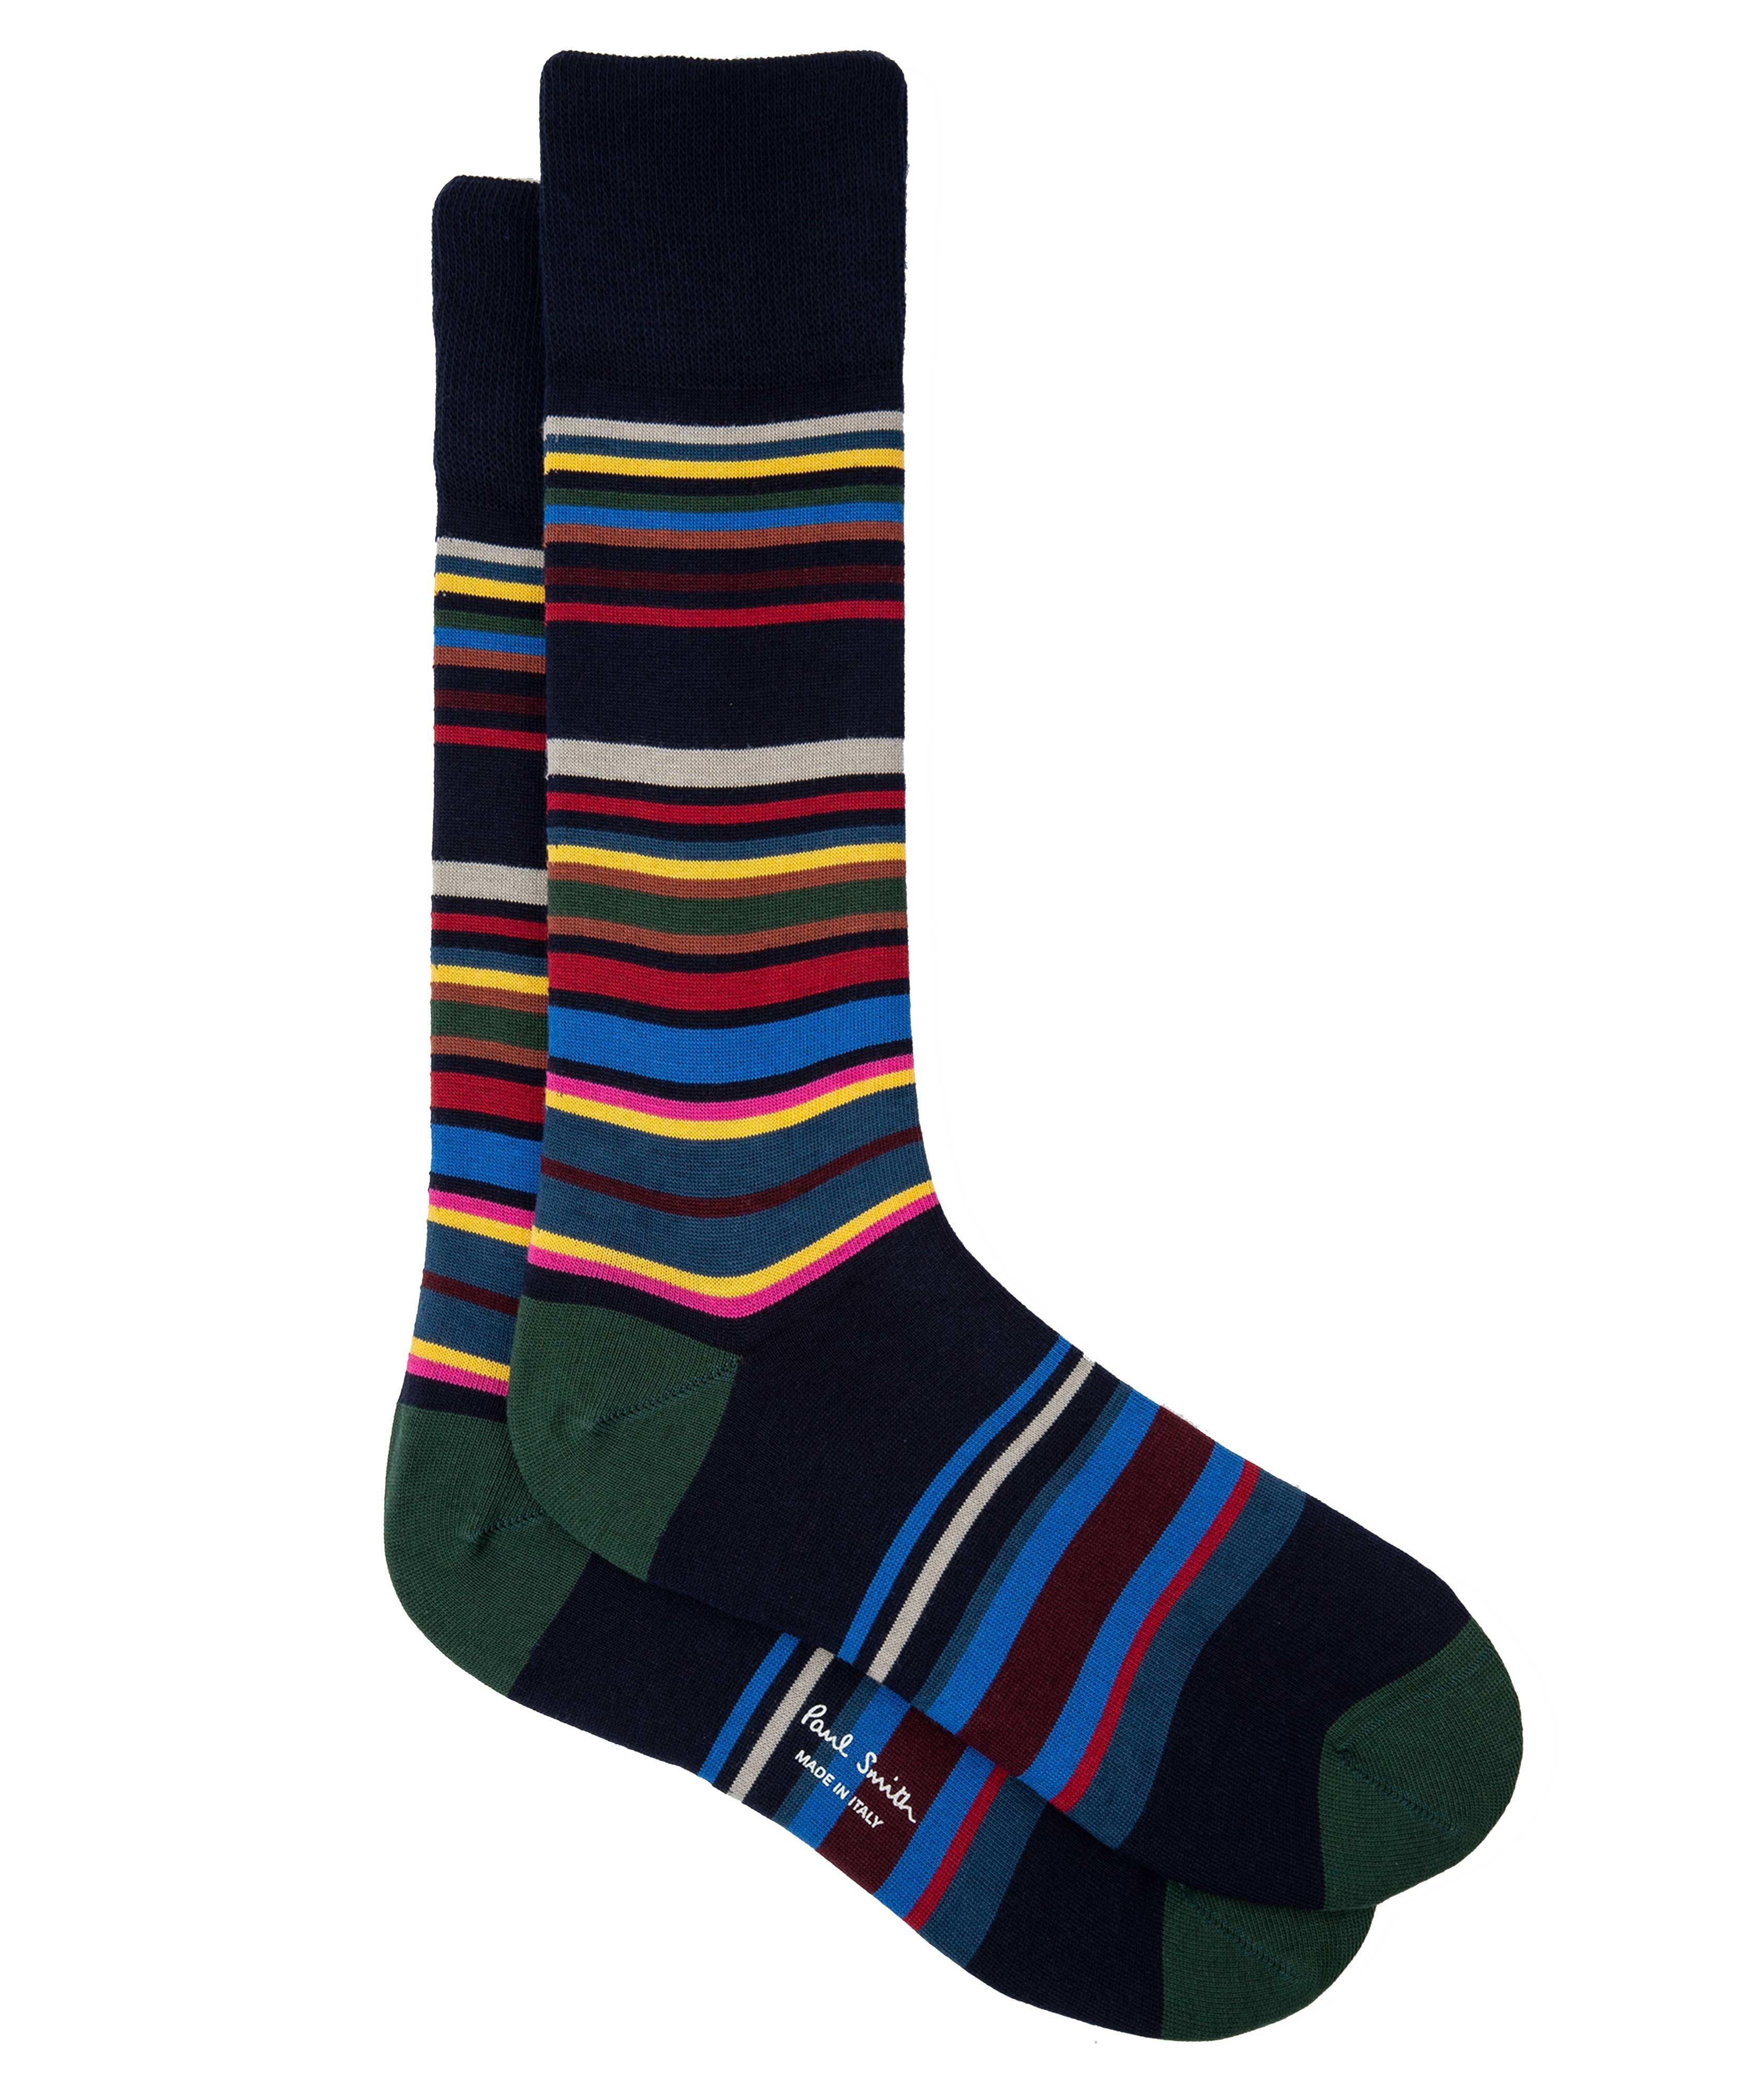 Signature Striped Cotton-Blend Socks image 0